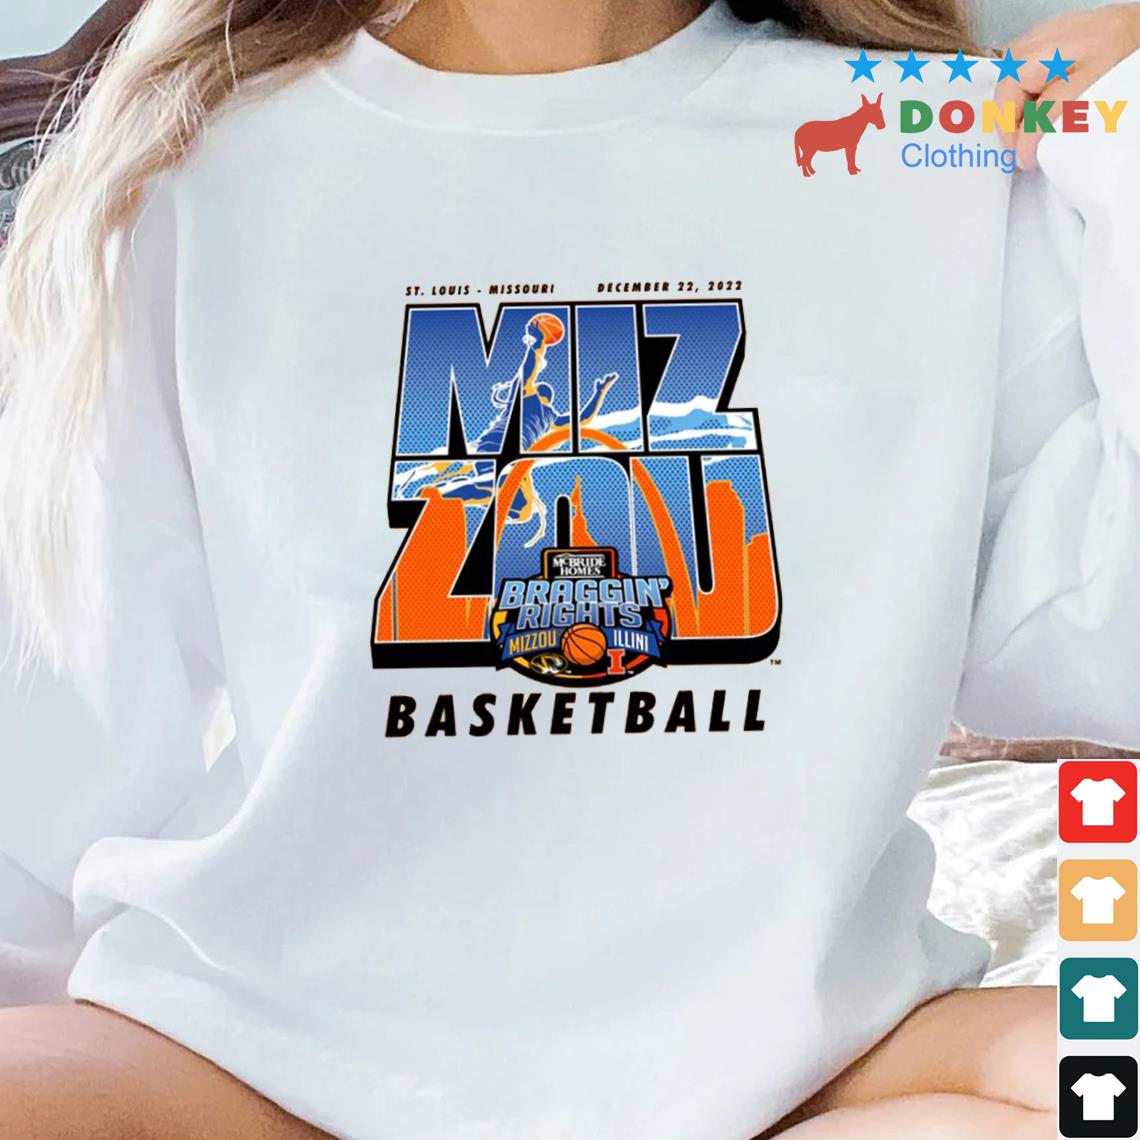 Mizzou Tigers Vs Illinois Braggin' Rights Basketball Dec 22 2022 Shirt